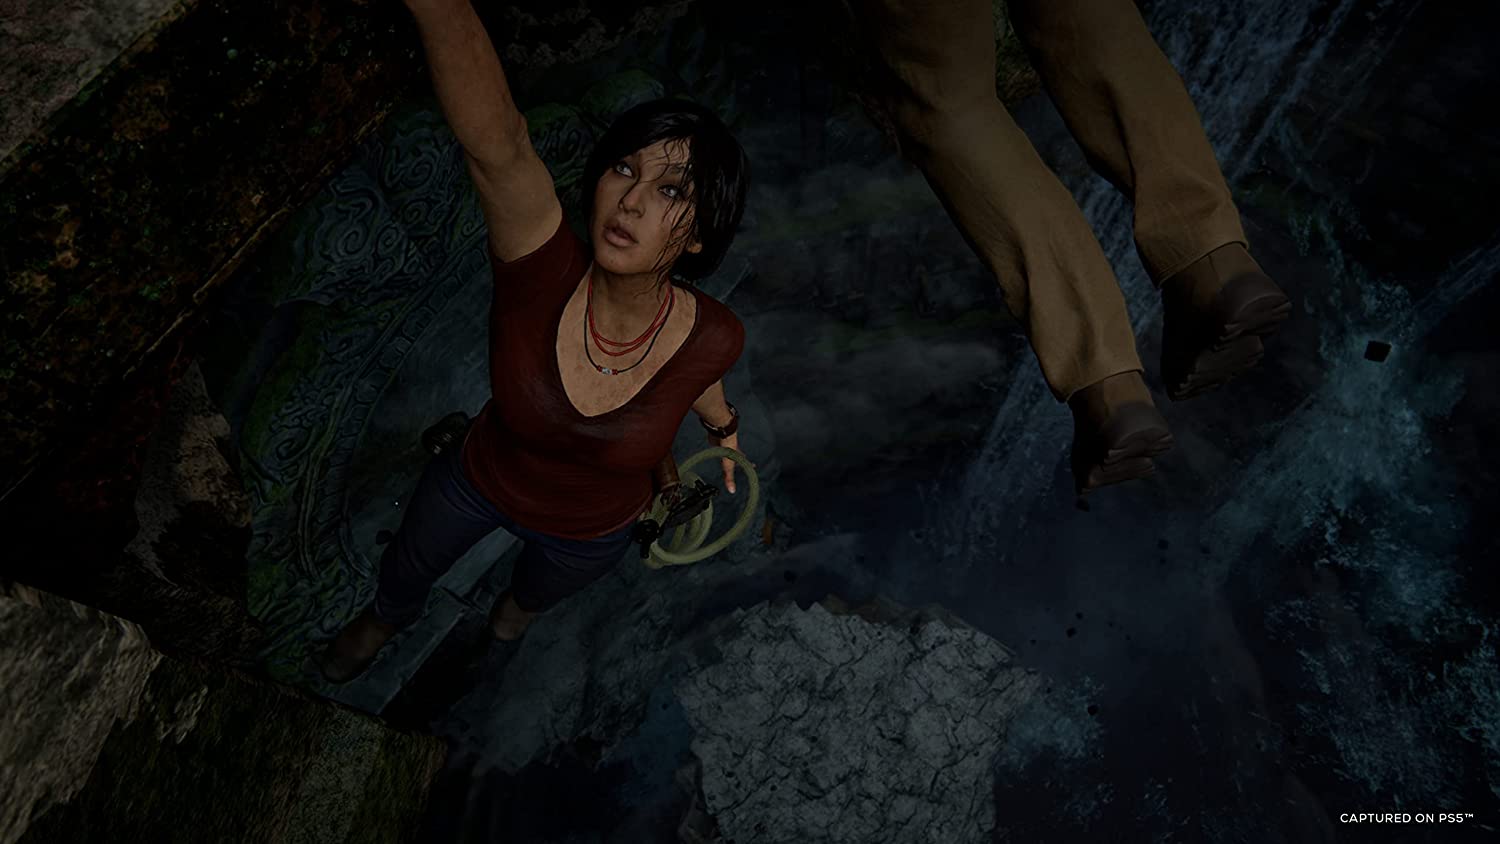 Uncharted 4: A Thief's End e Civilization 6 foram destaques da semana